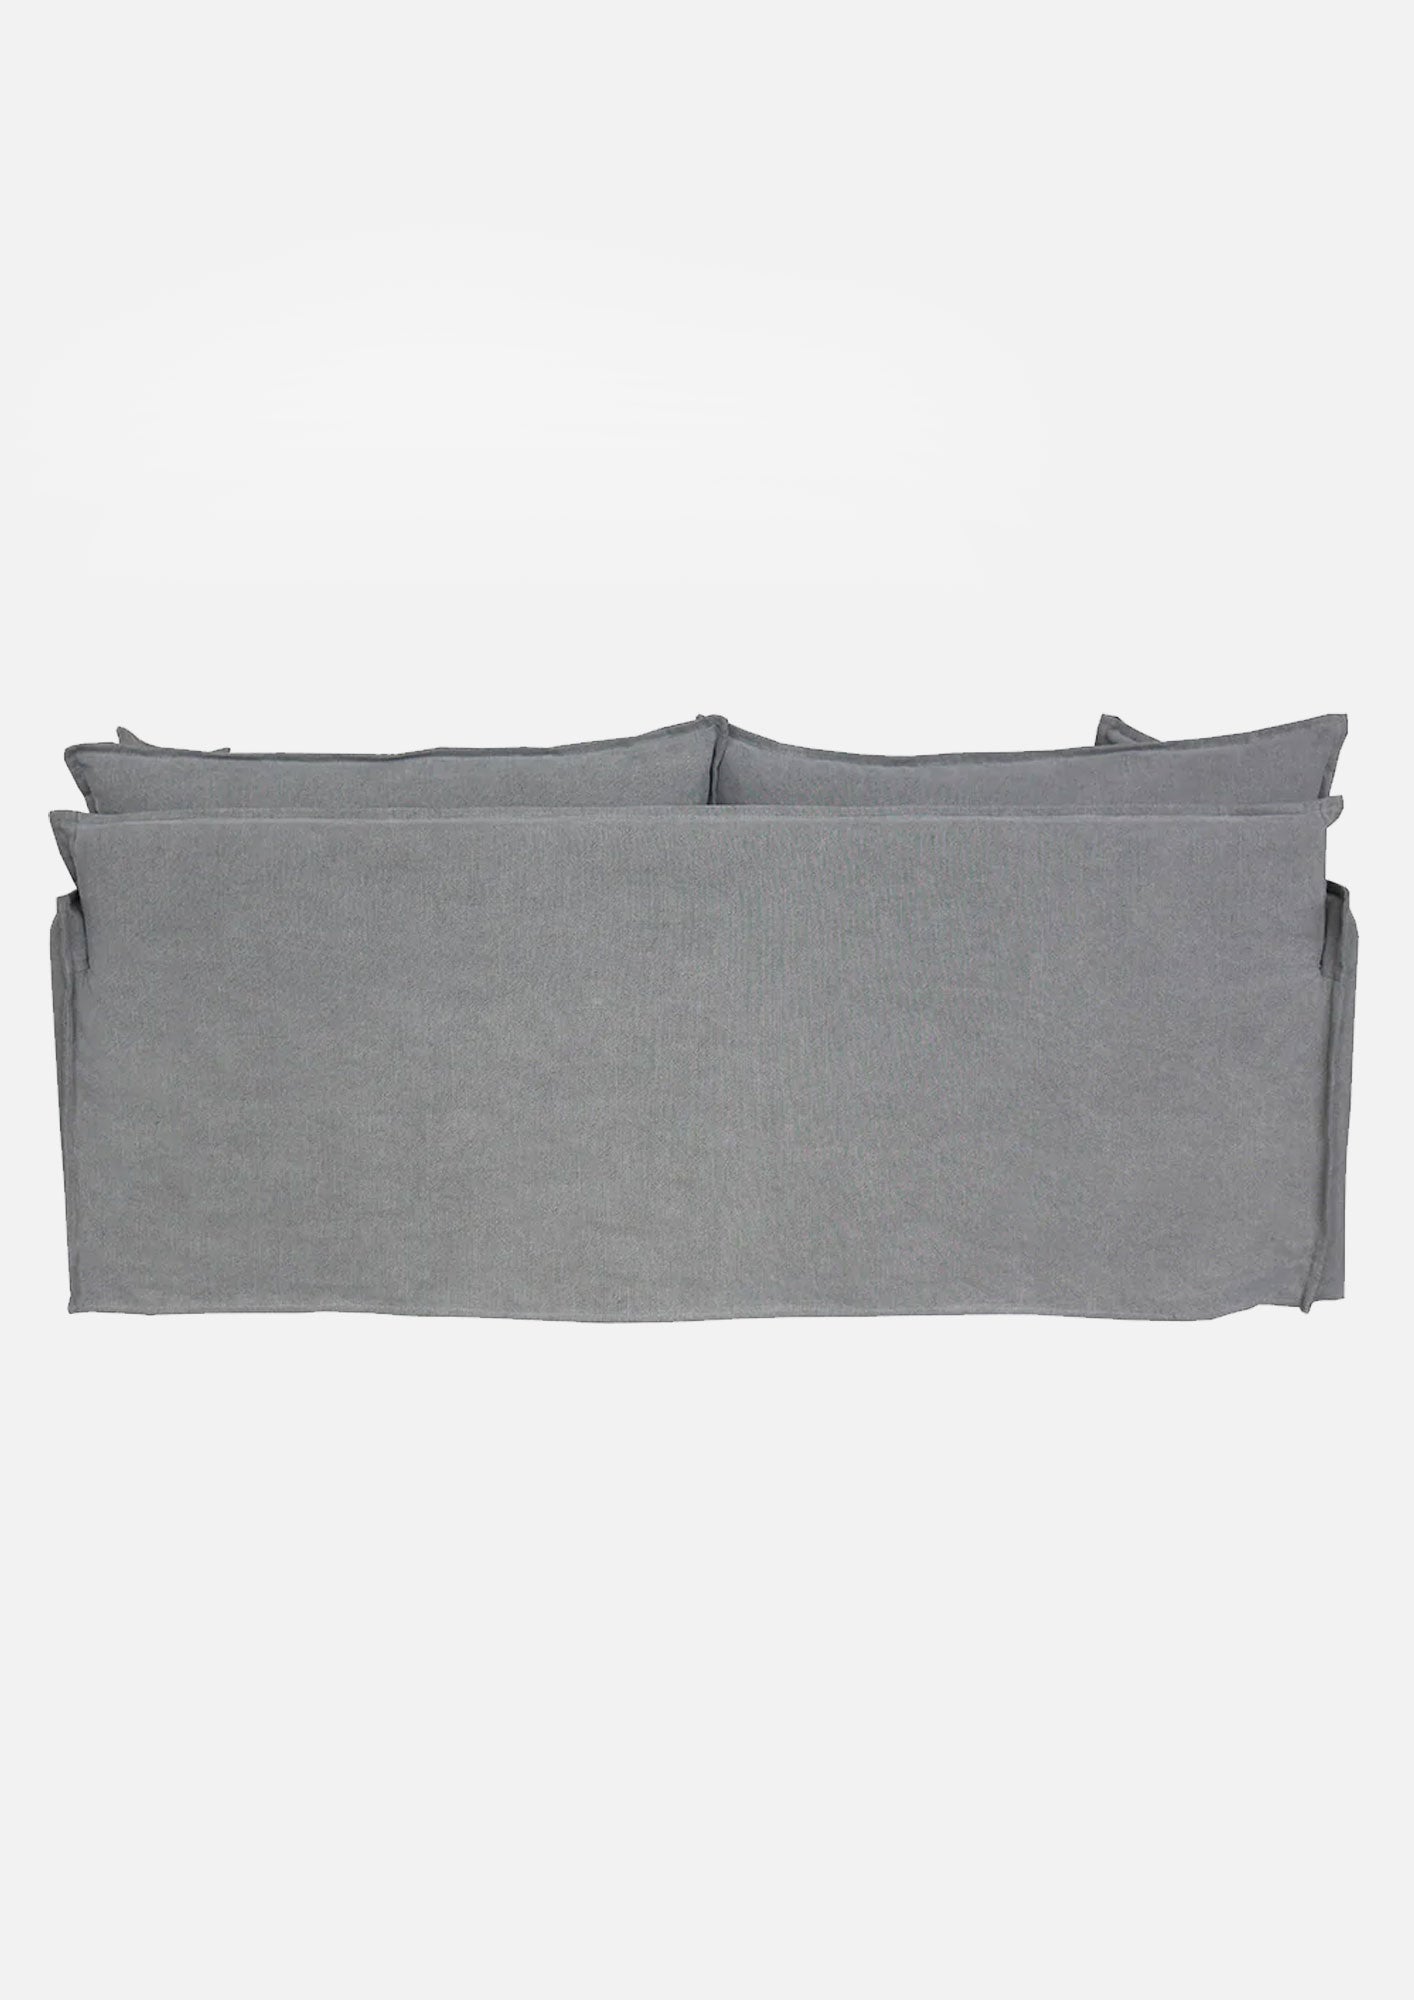 Wallace Slip Cover Sofa | Dark Grey